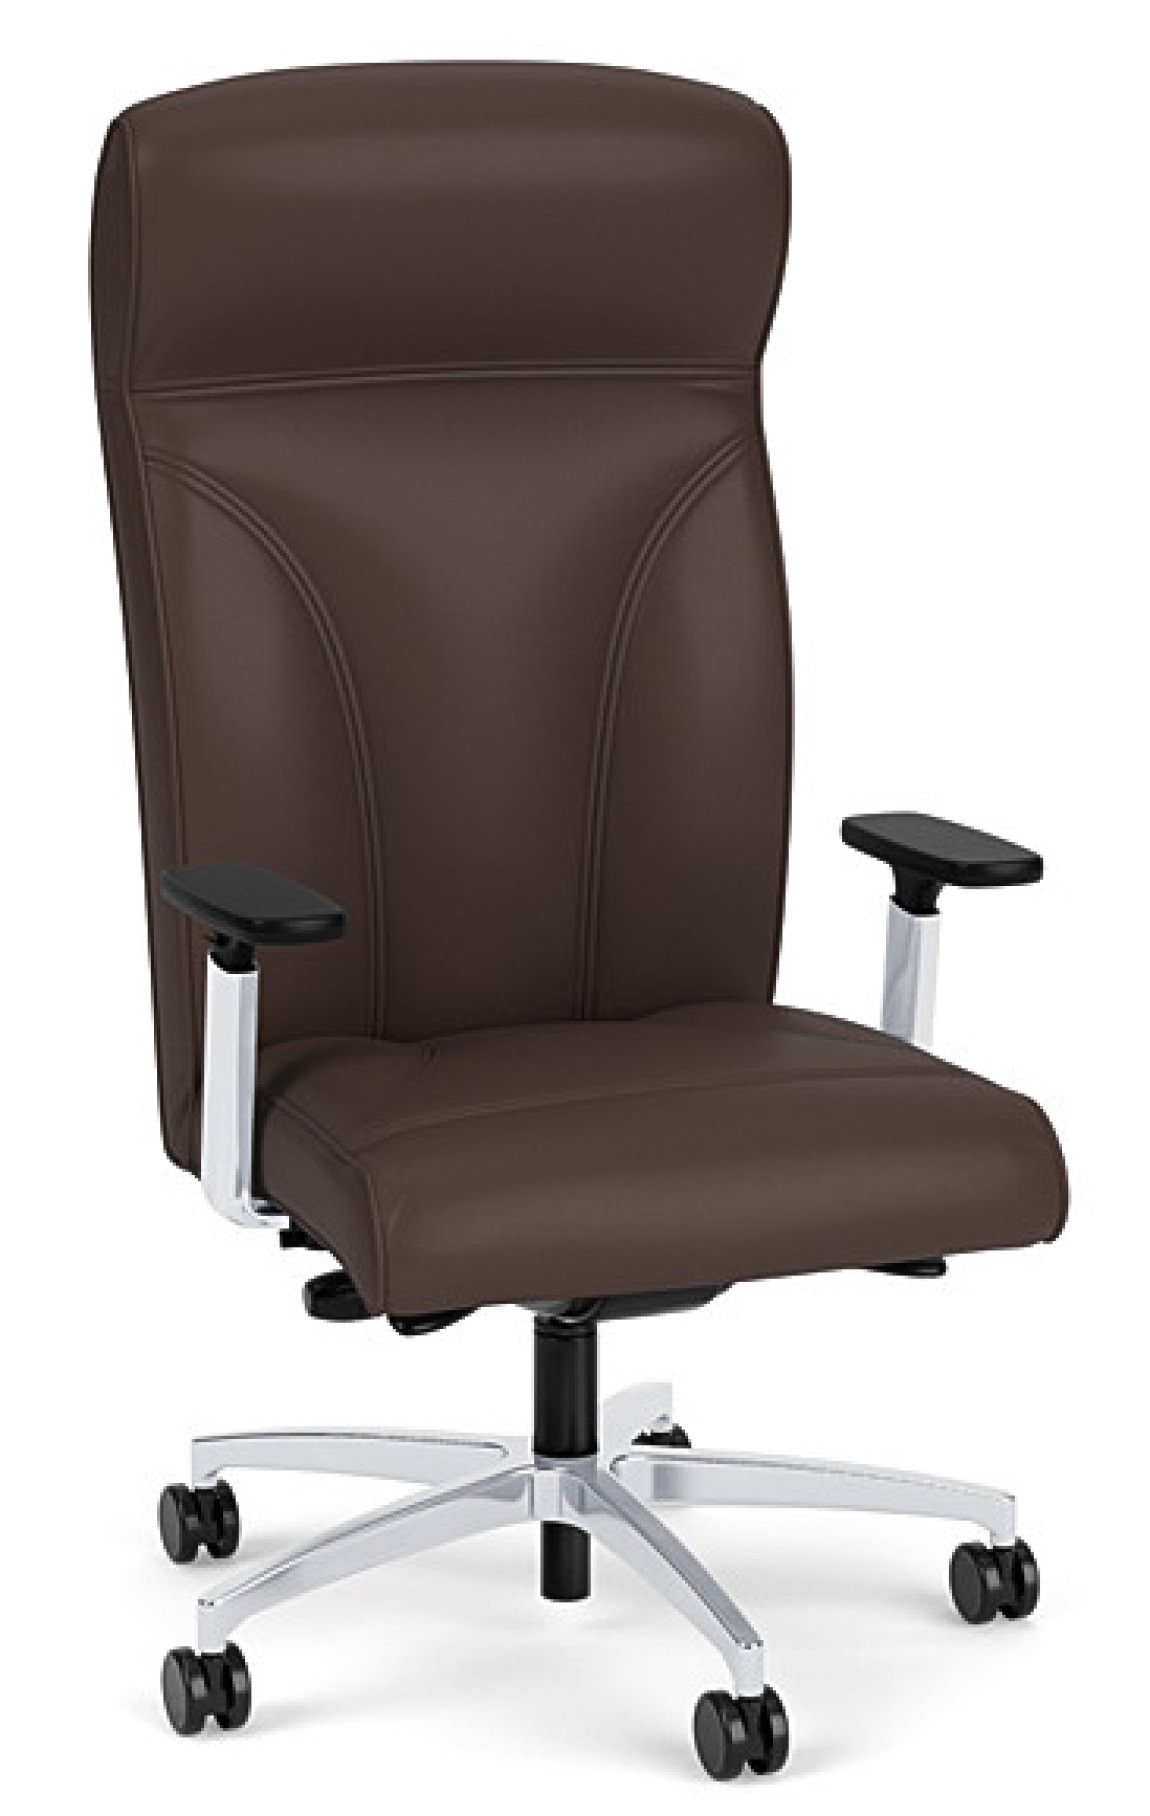 Leather Executive High Back Chair - Heavy Duty